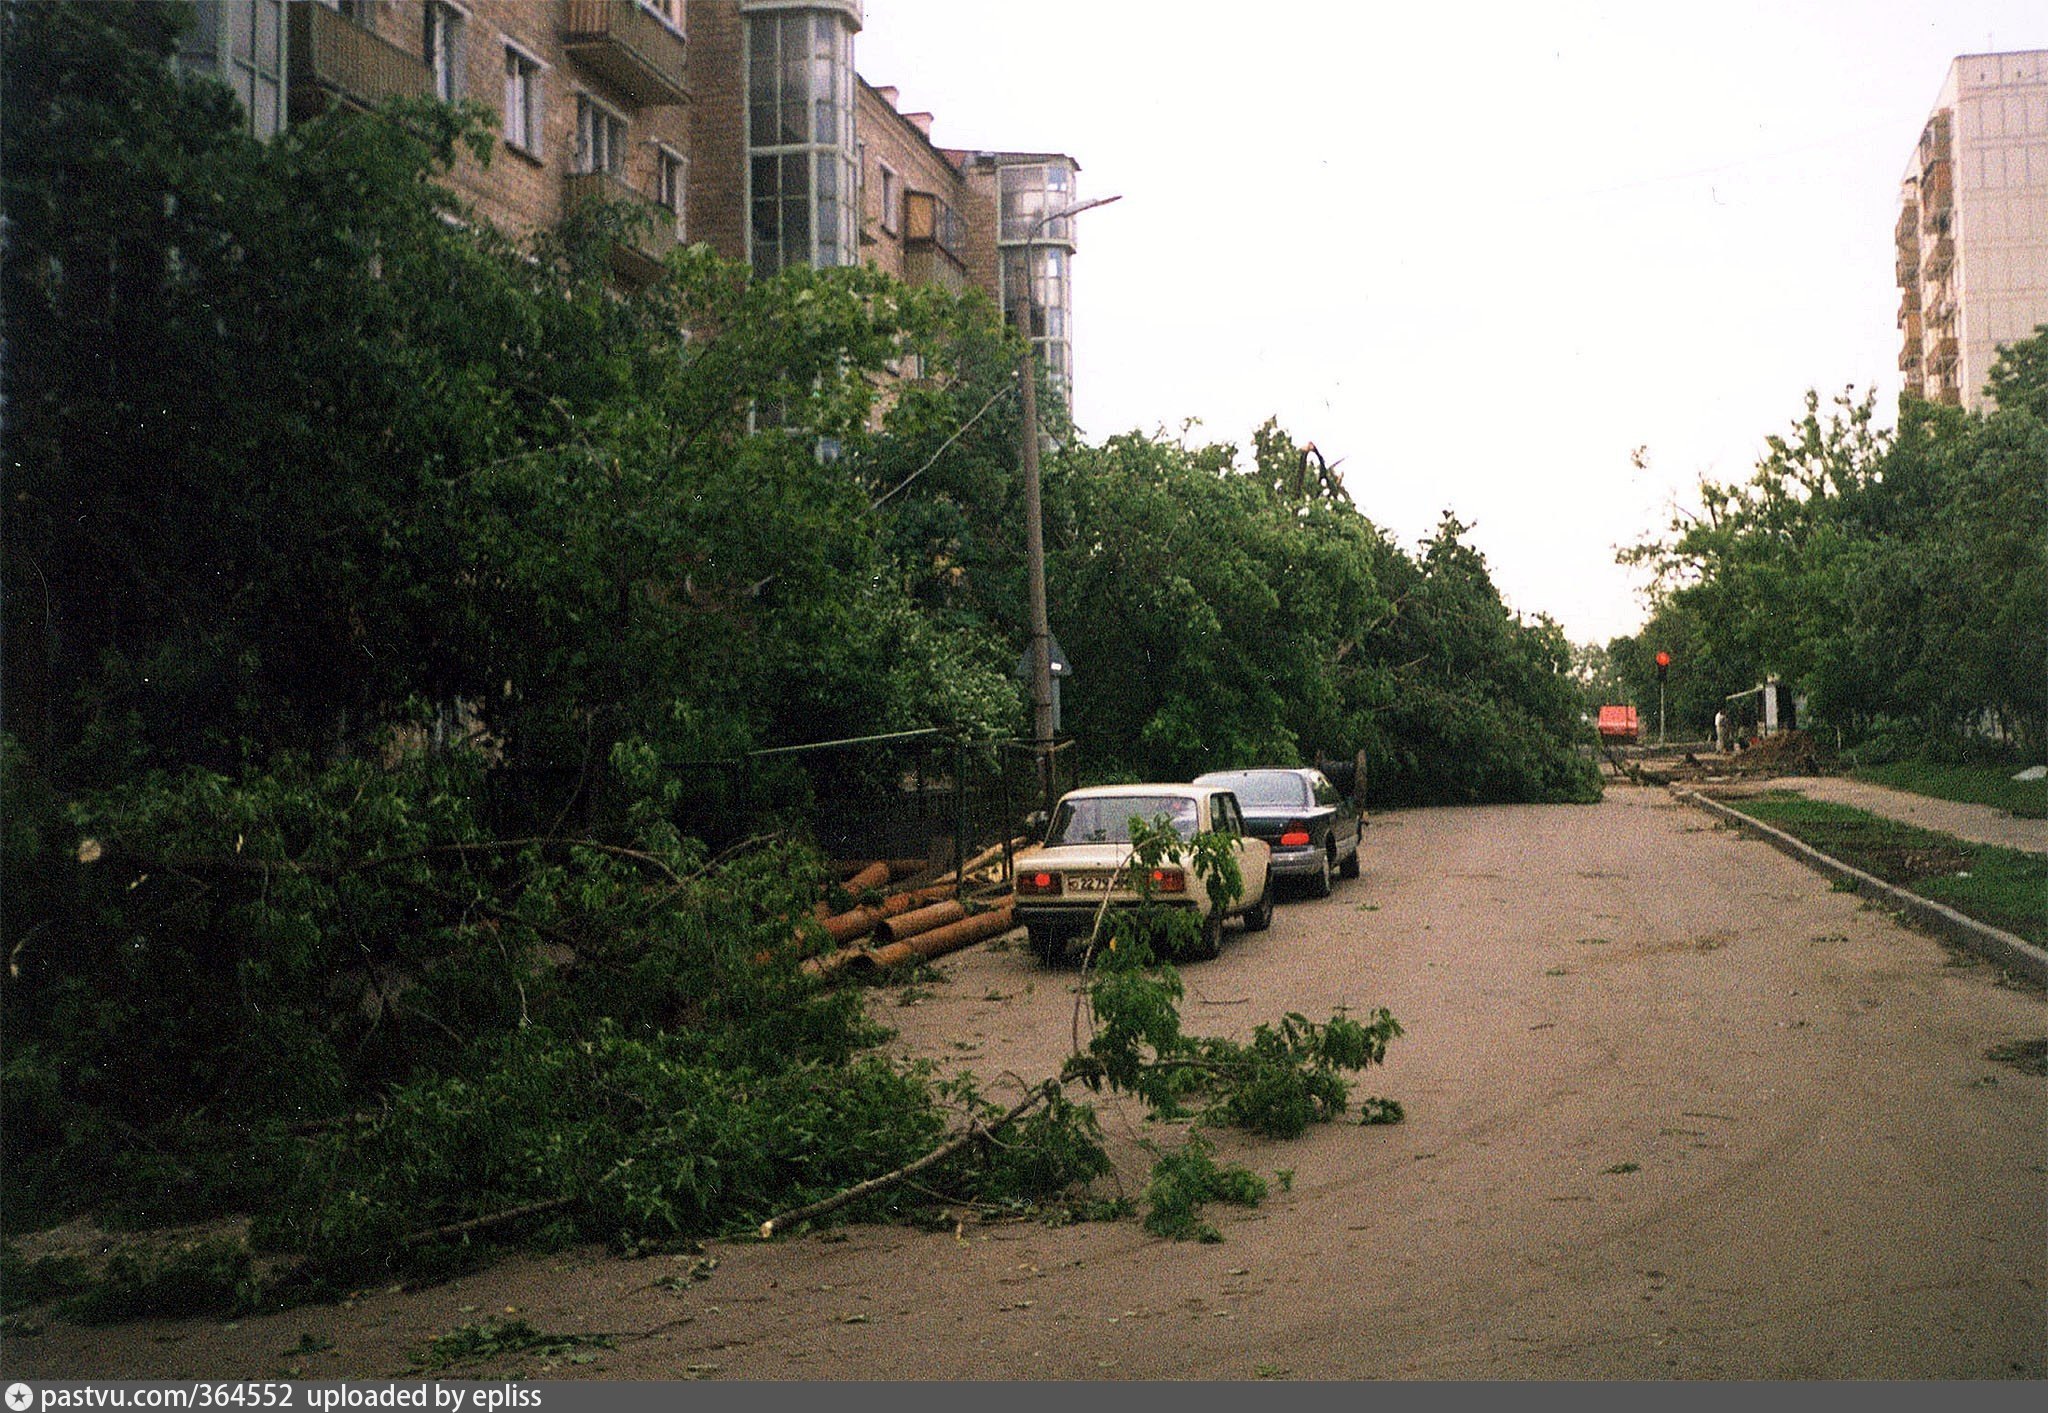 30 июня 1998 г. Ураган в Москве 1998. 21 Июня 1998 ураган в Москве. Смерч в Москве 1998. Ураган 98 года в Москве.